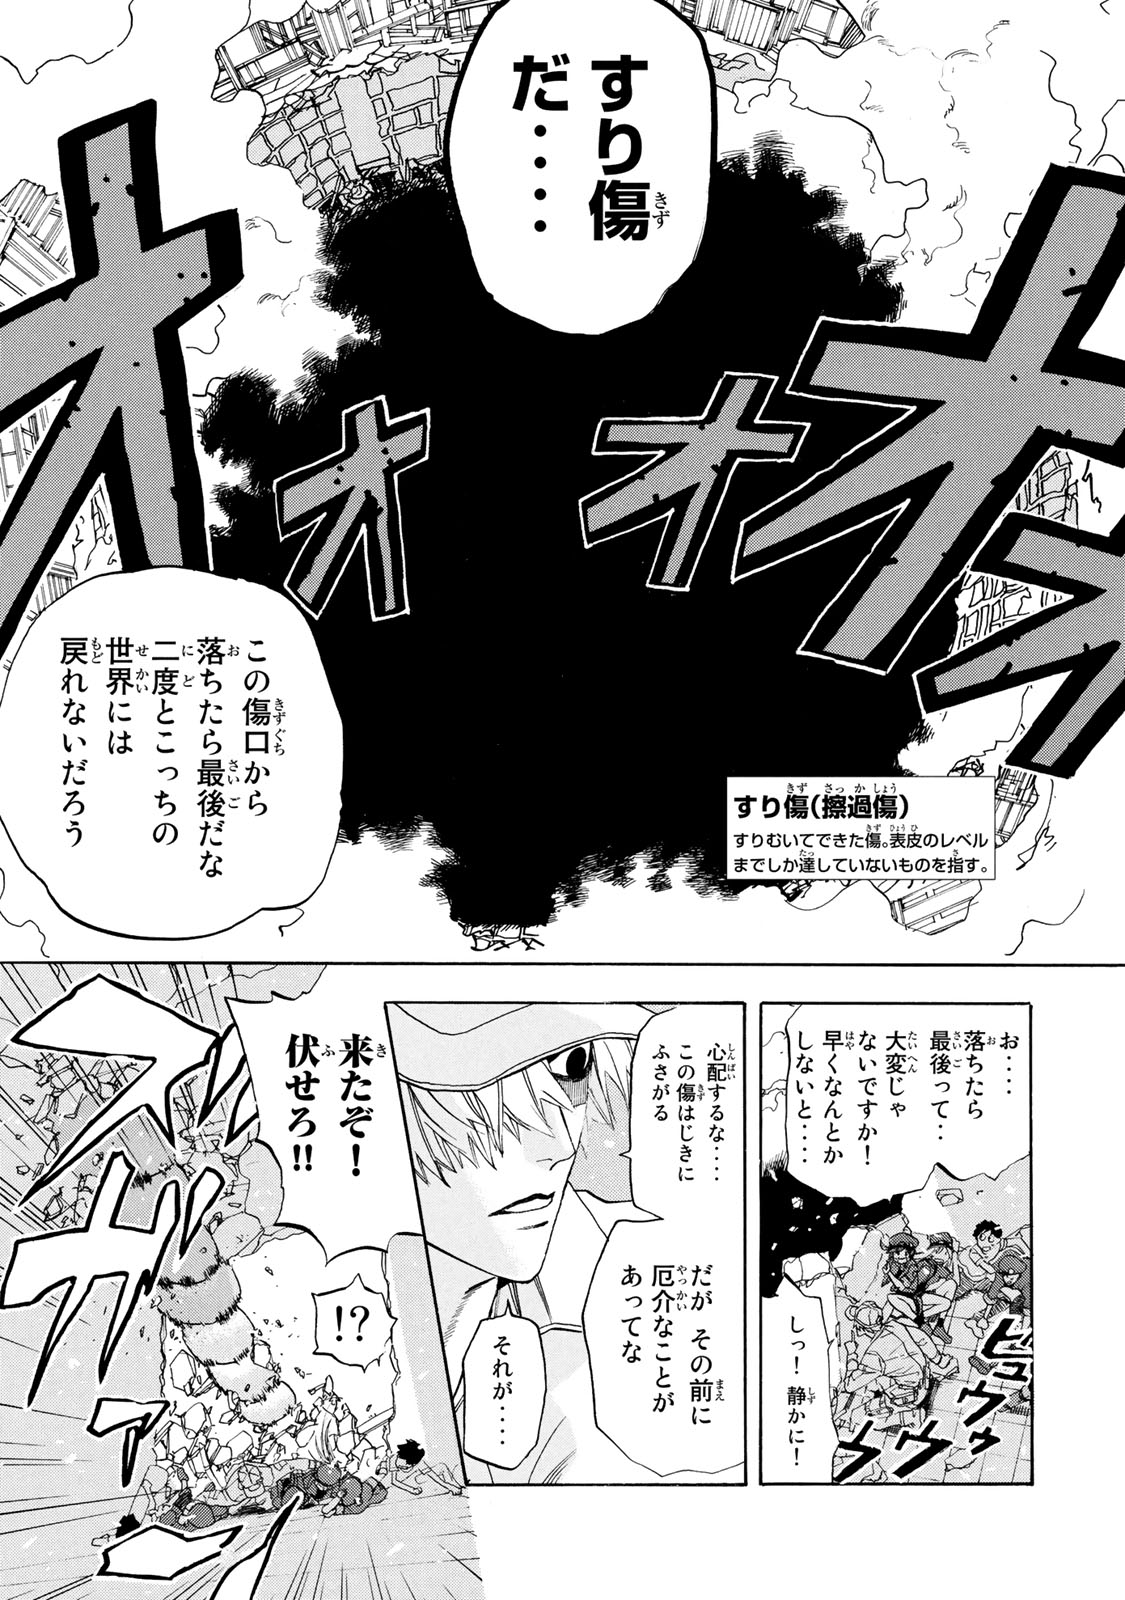 Hataraku Saibou - Chapter 4 - Page 9